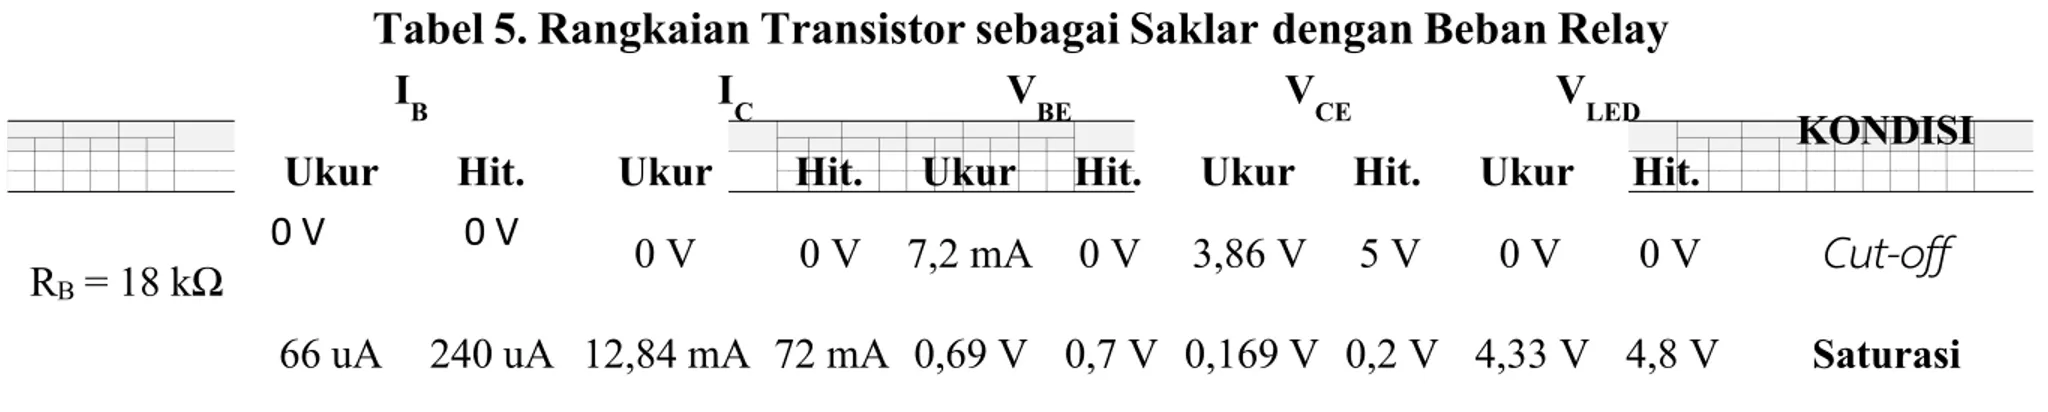 Tabel 5. Rangkaian Transistor sebagai Saklar dengan Beban Relay I B I C V BE V CE V LED KONDISI